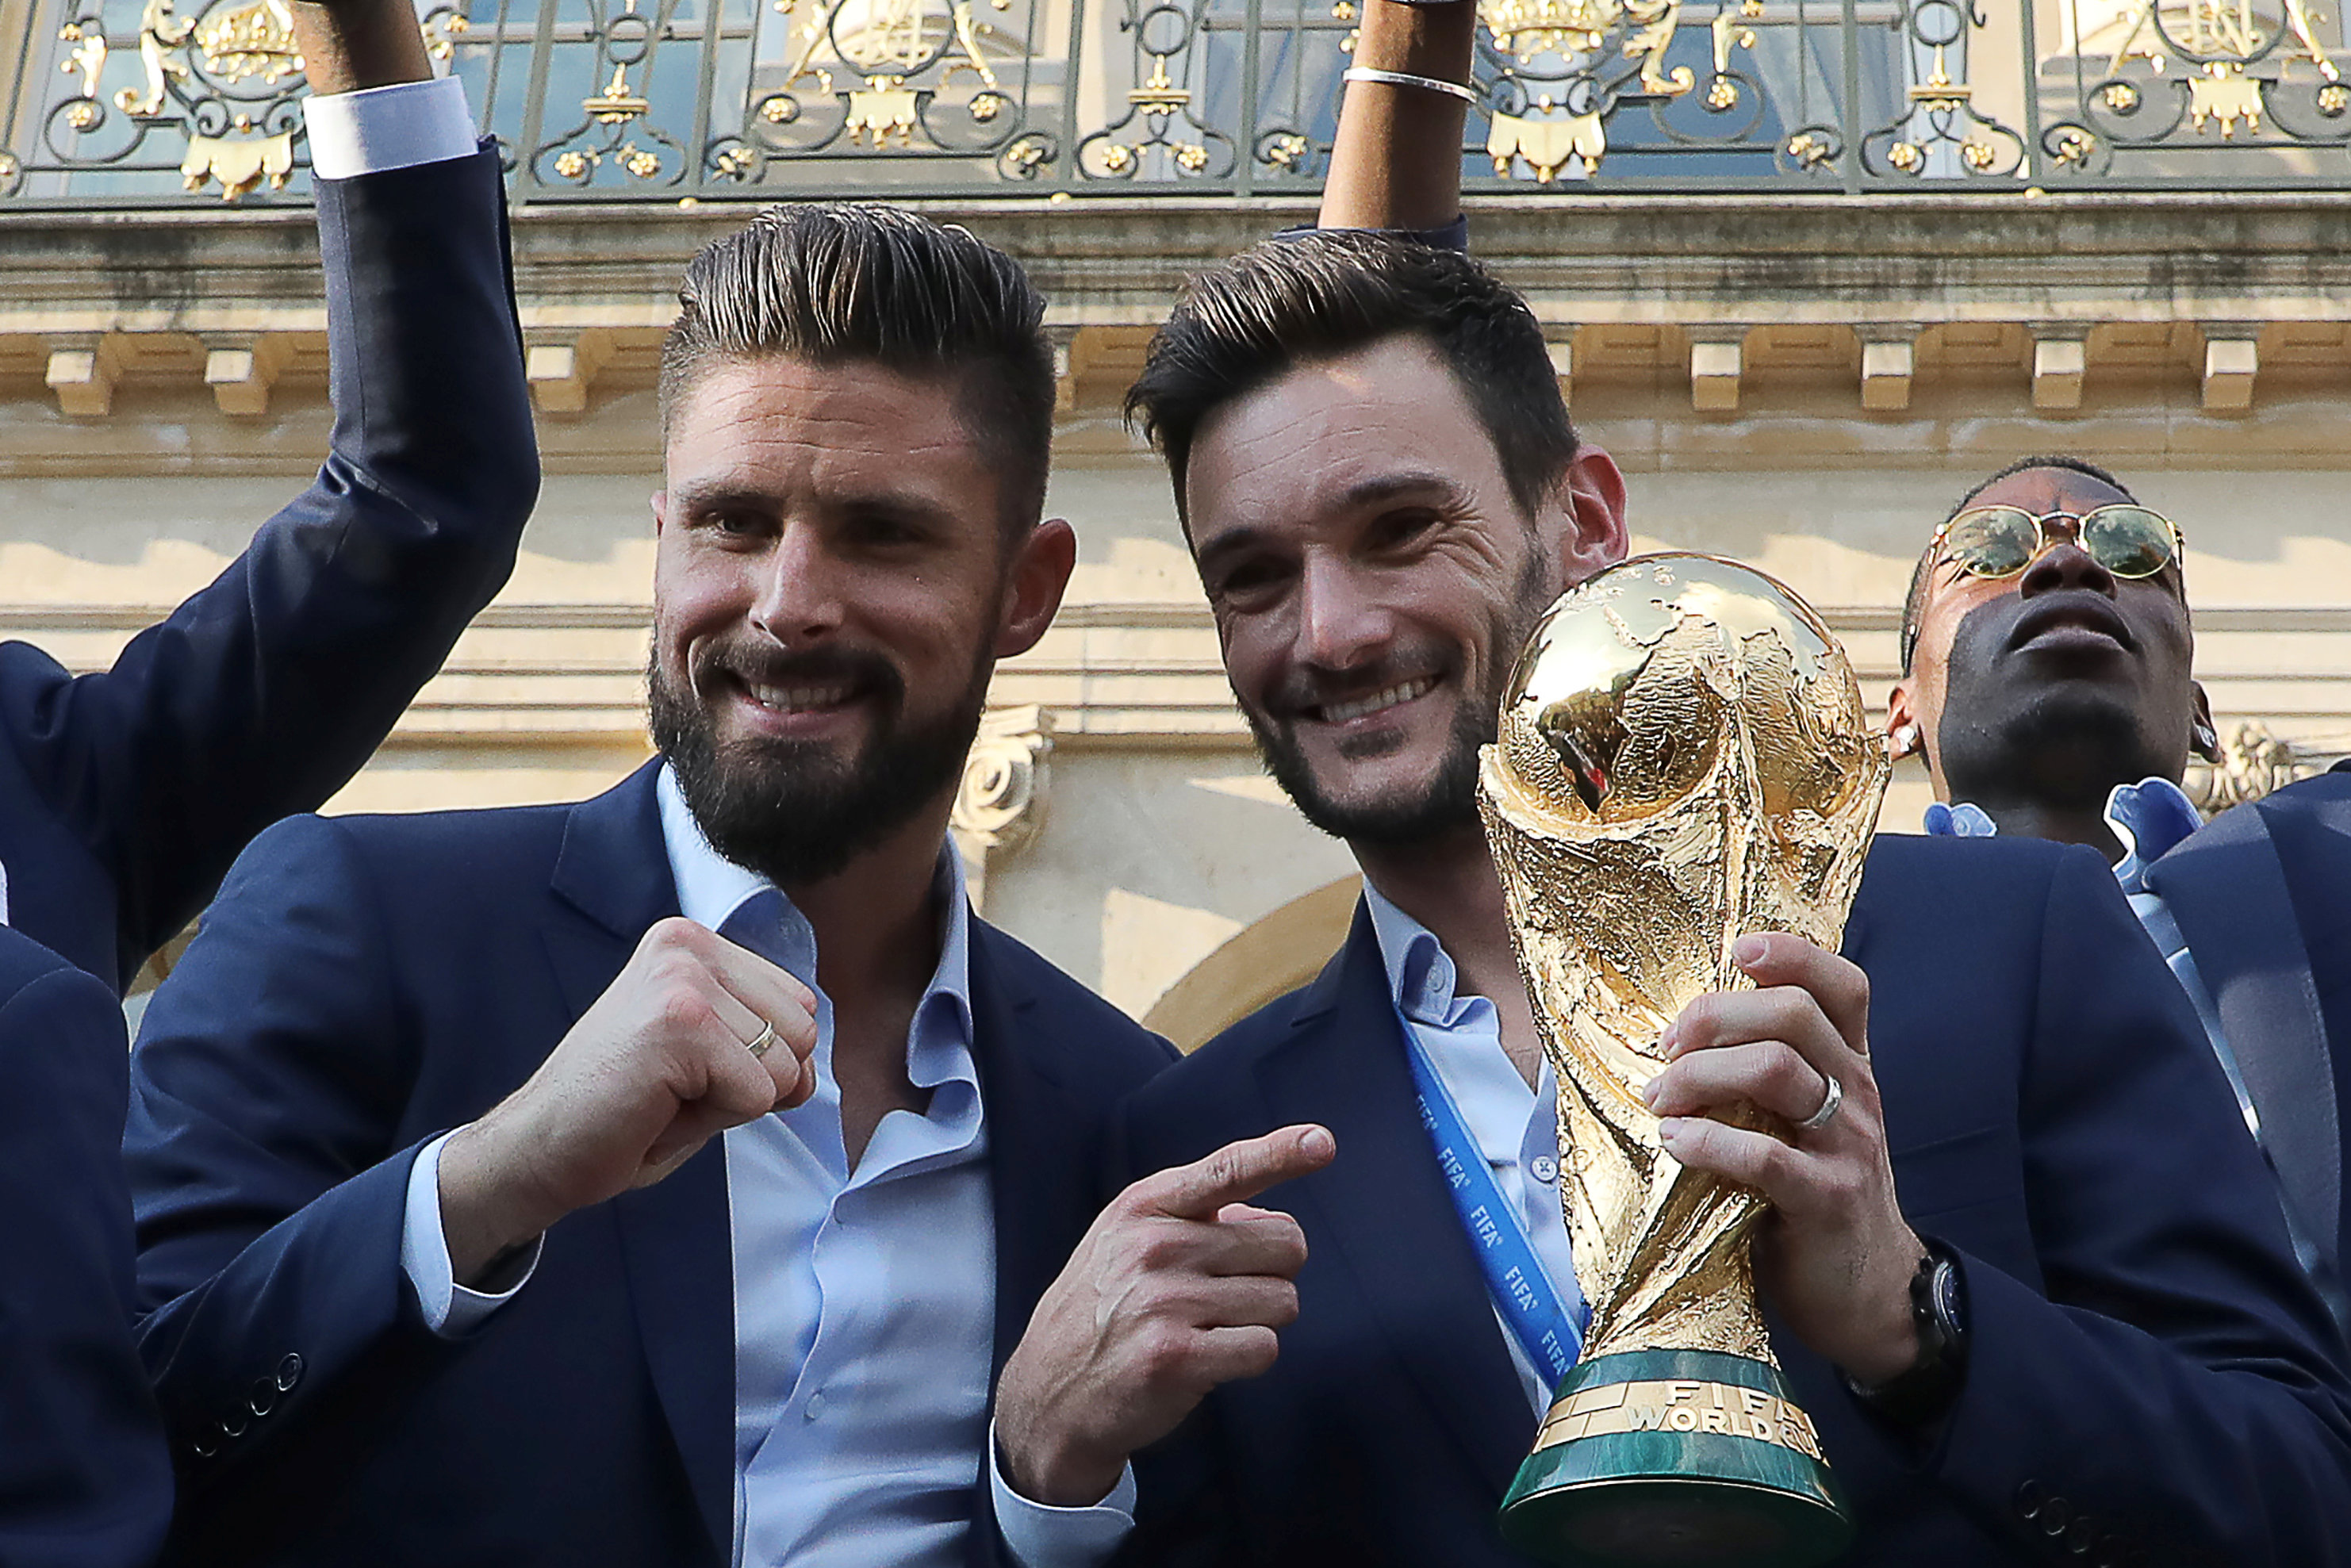 Football: France's Giroud savours World Cup glory despite criticism